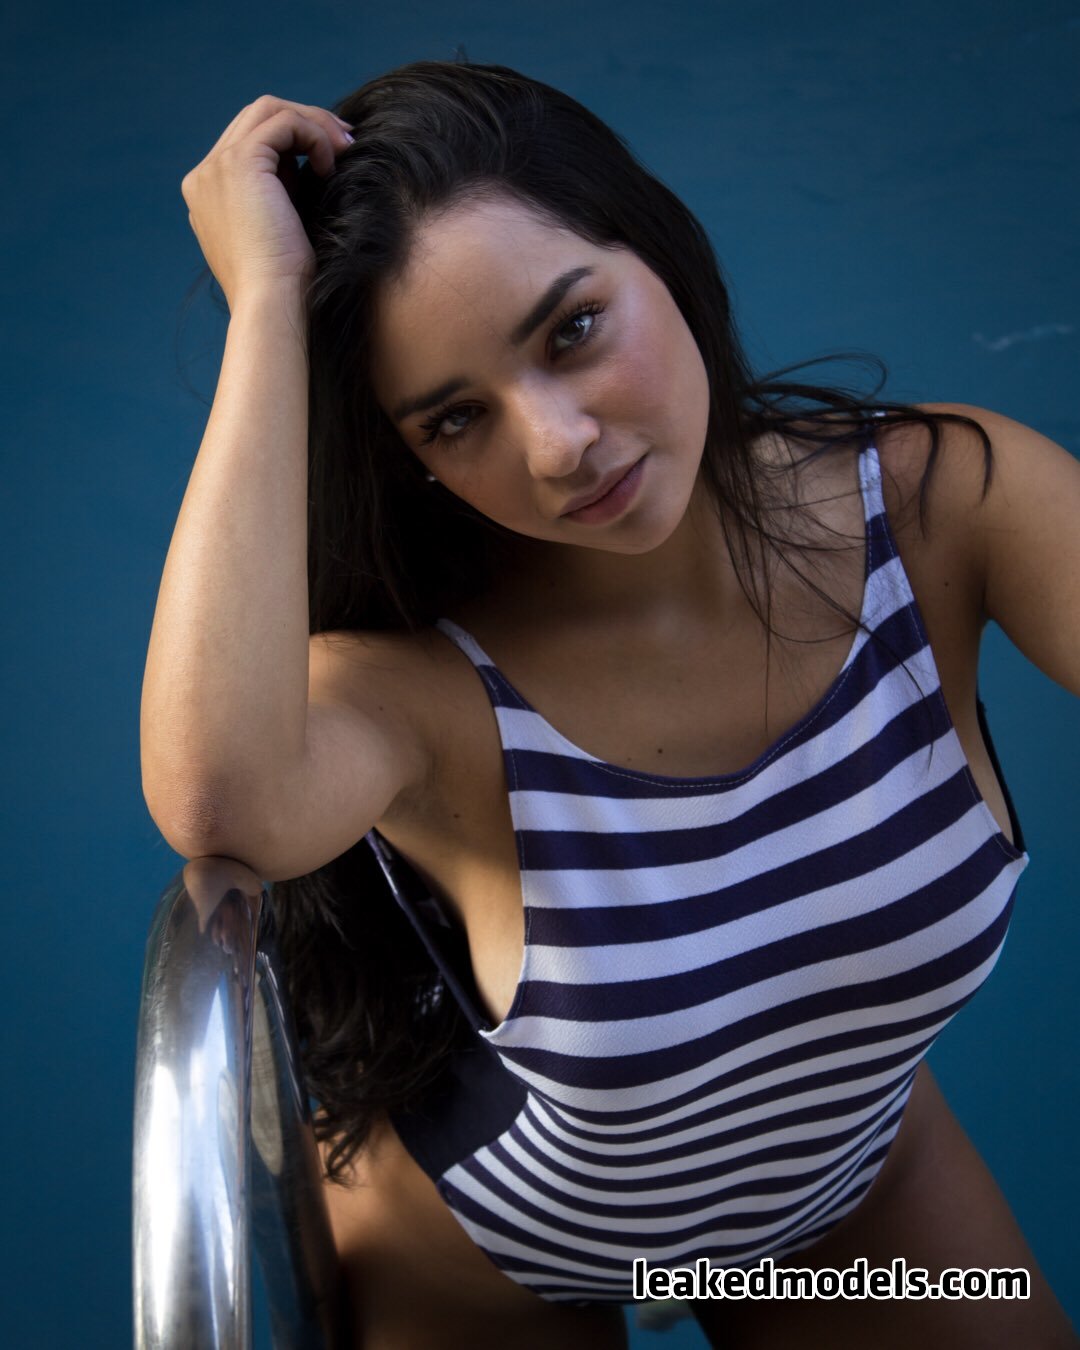 katy gomita leaked nude leakedmodels.com 0014 - Katherine Alejandra Martínez – Katy Gomita OnlyFans Sexy Leaks (30 Photos)